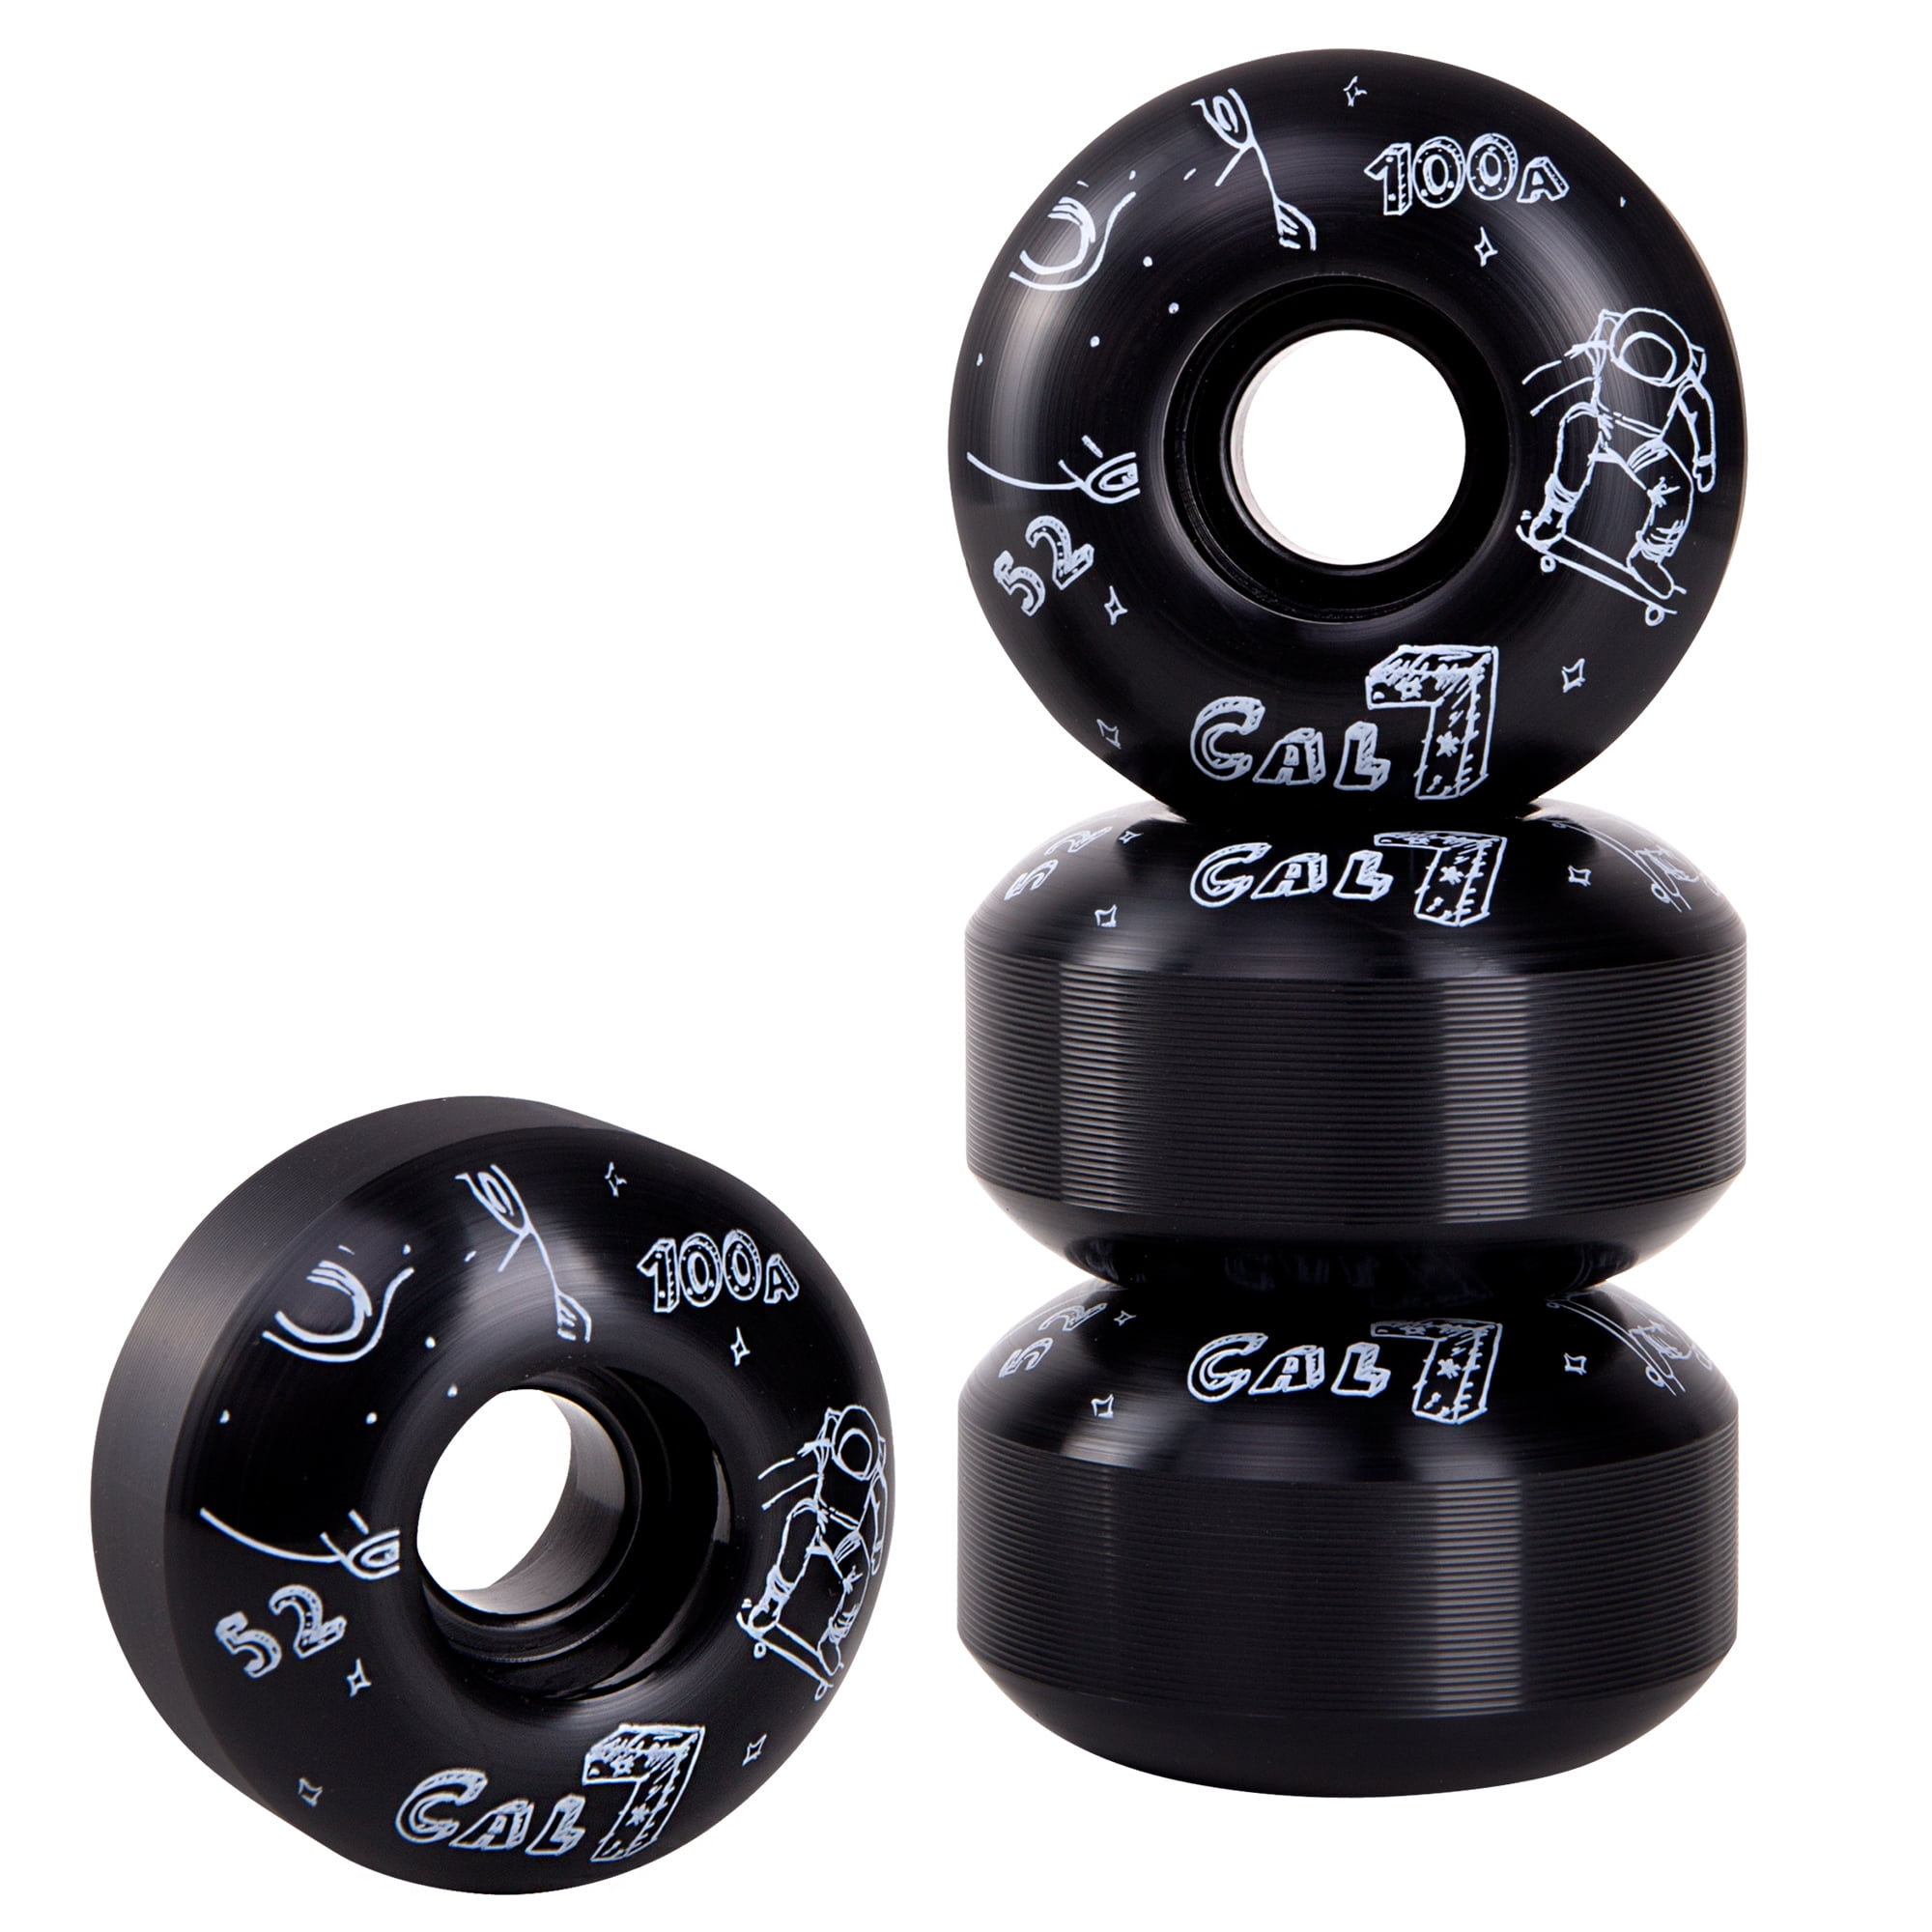 Cal 7 Bearings Cal 7 52mm Graphic Skateboard Wheels 